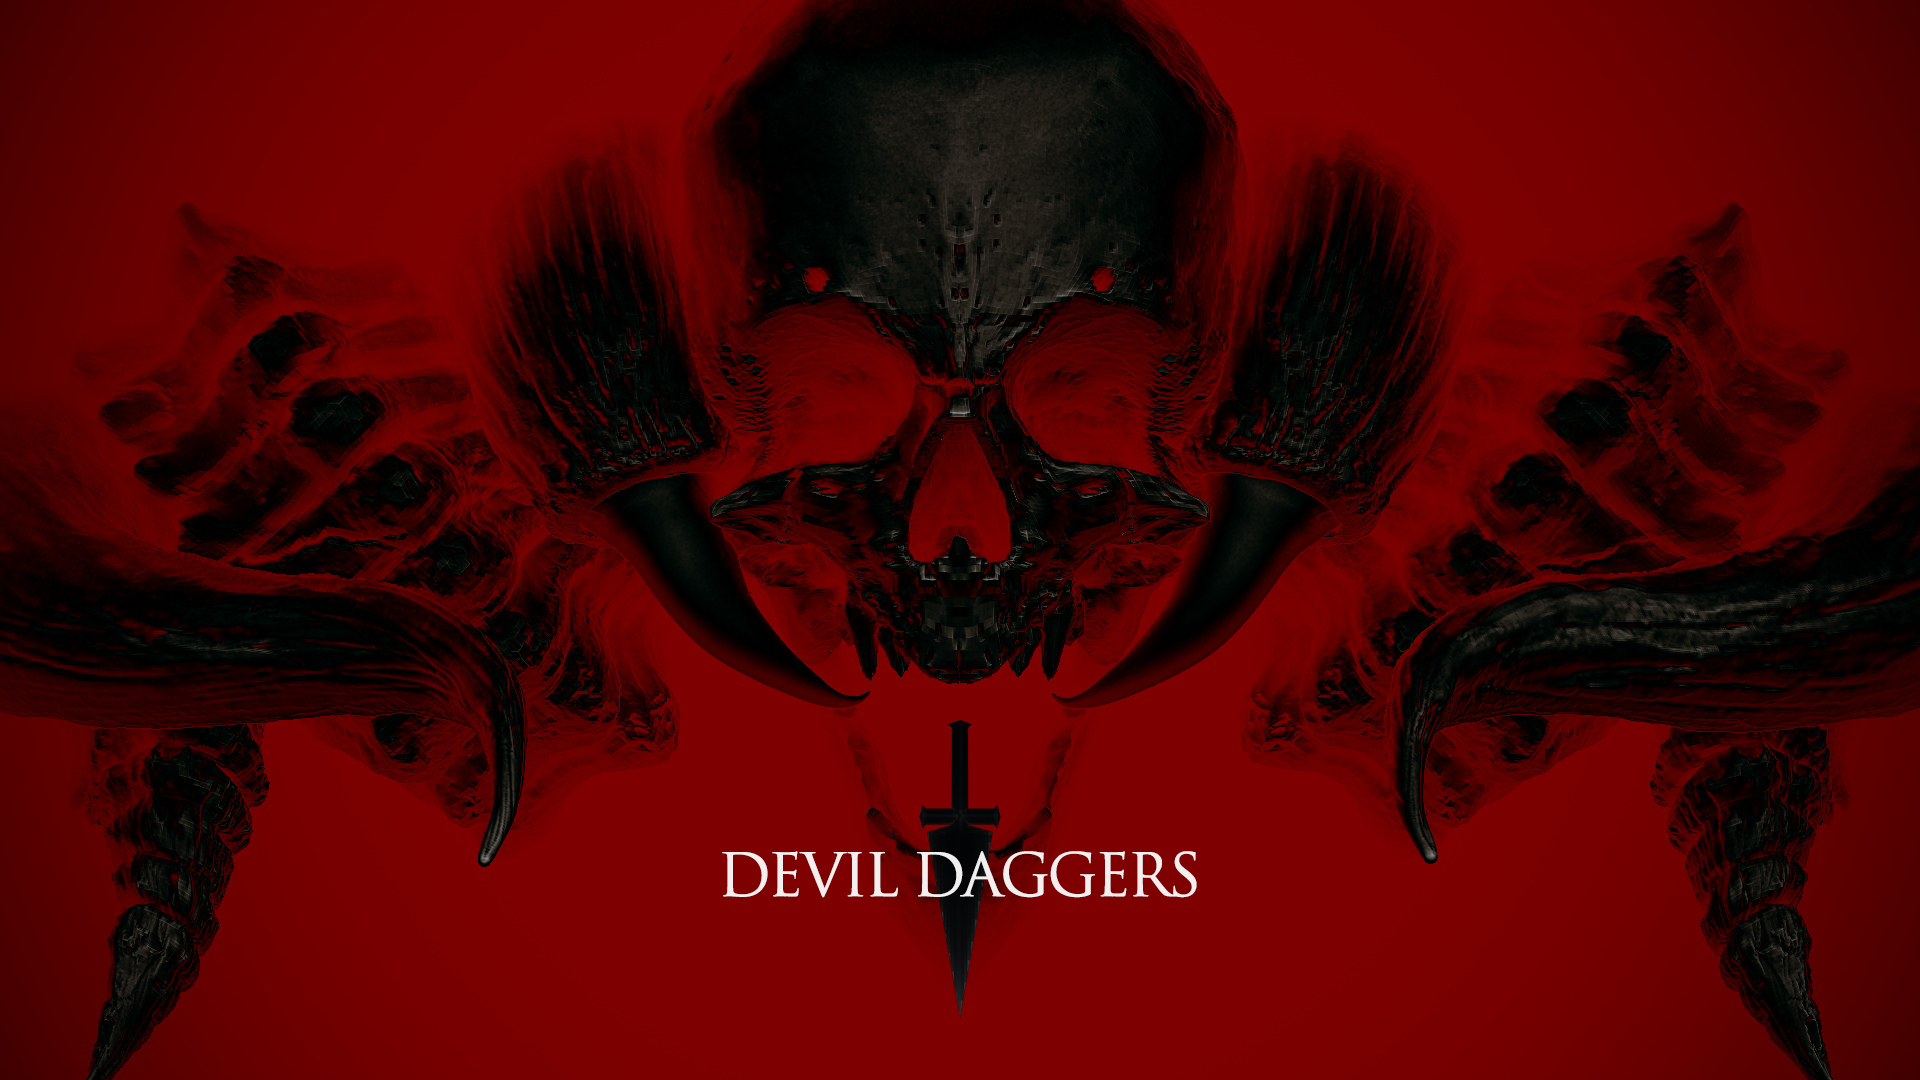 devil daggers soundtrack